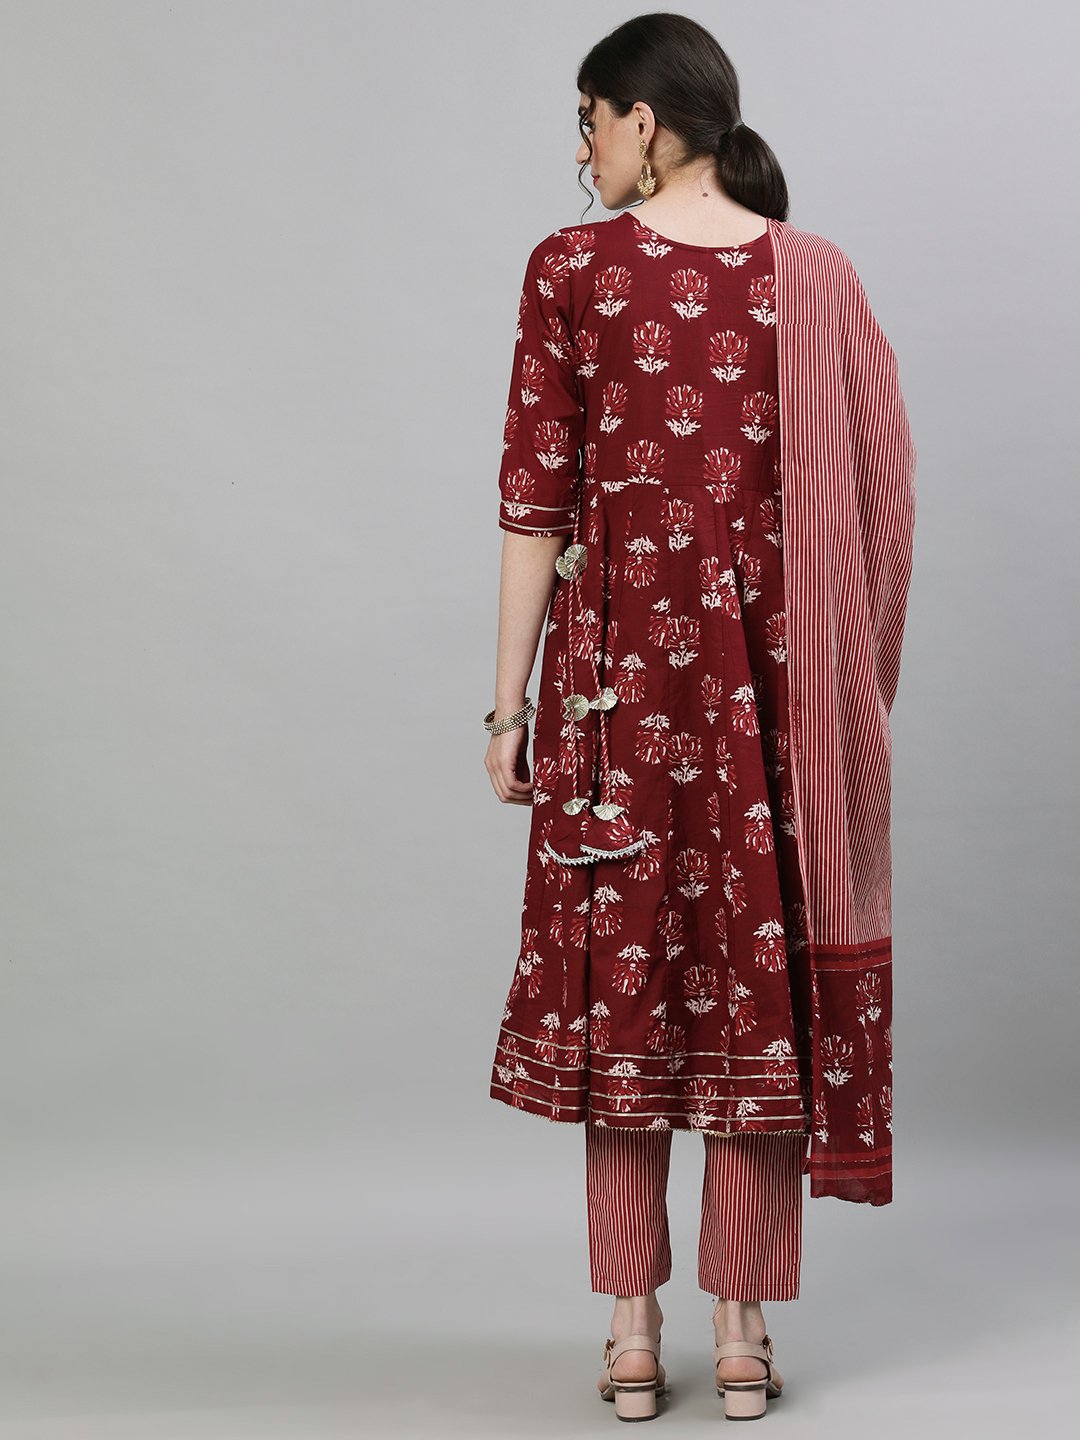 Ishin Women's Cotton Maroon Jewel Neck Embellished Anarkali Kurta Trouser Dupatta Set